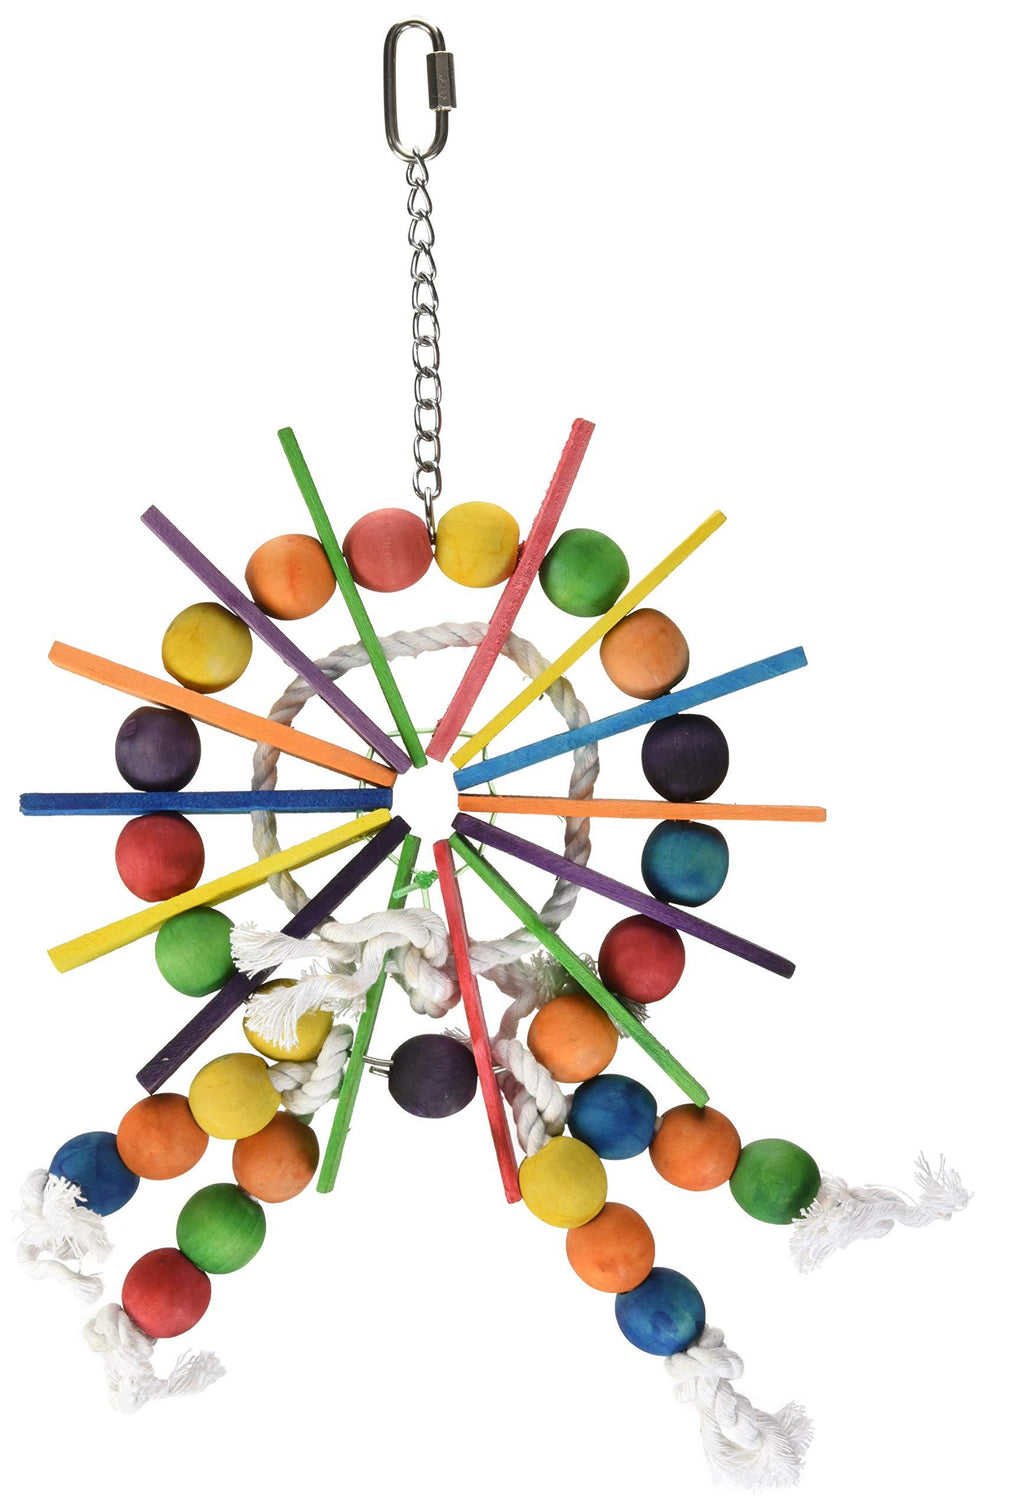 [Australia] - Prevue Pet Products 60957 Bodacious Bites Ferris Wheel Bird Toy, Multicolor 